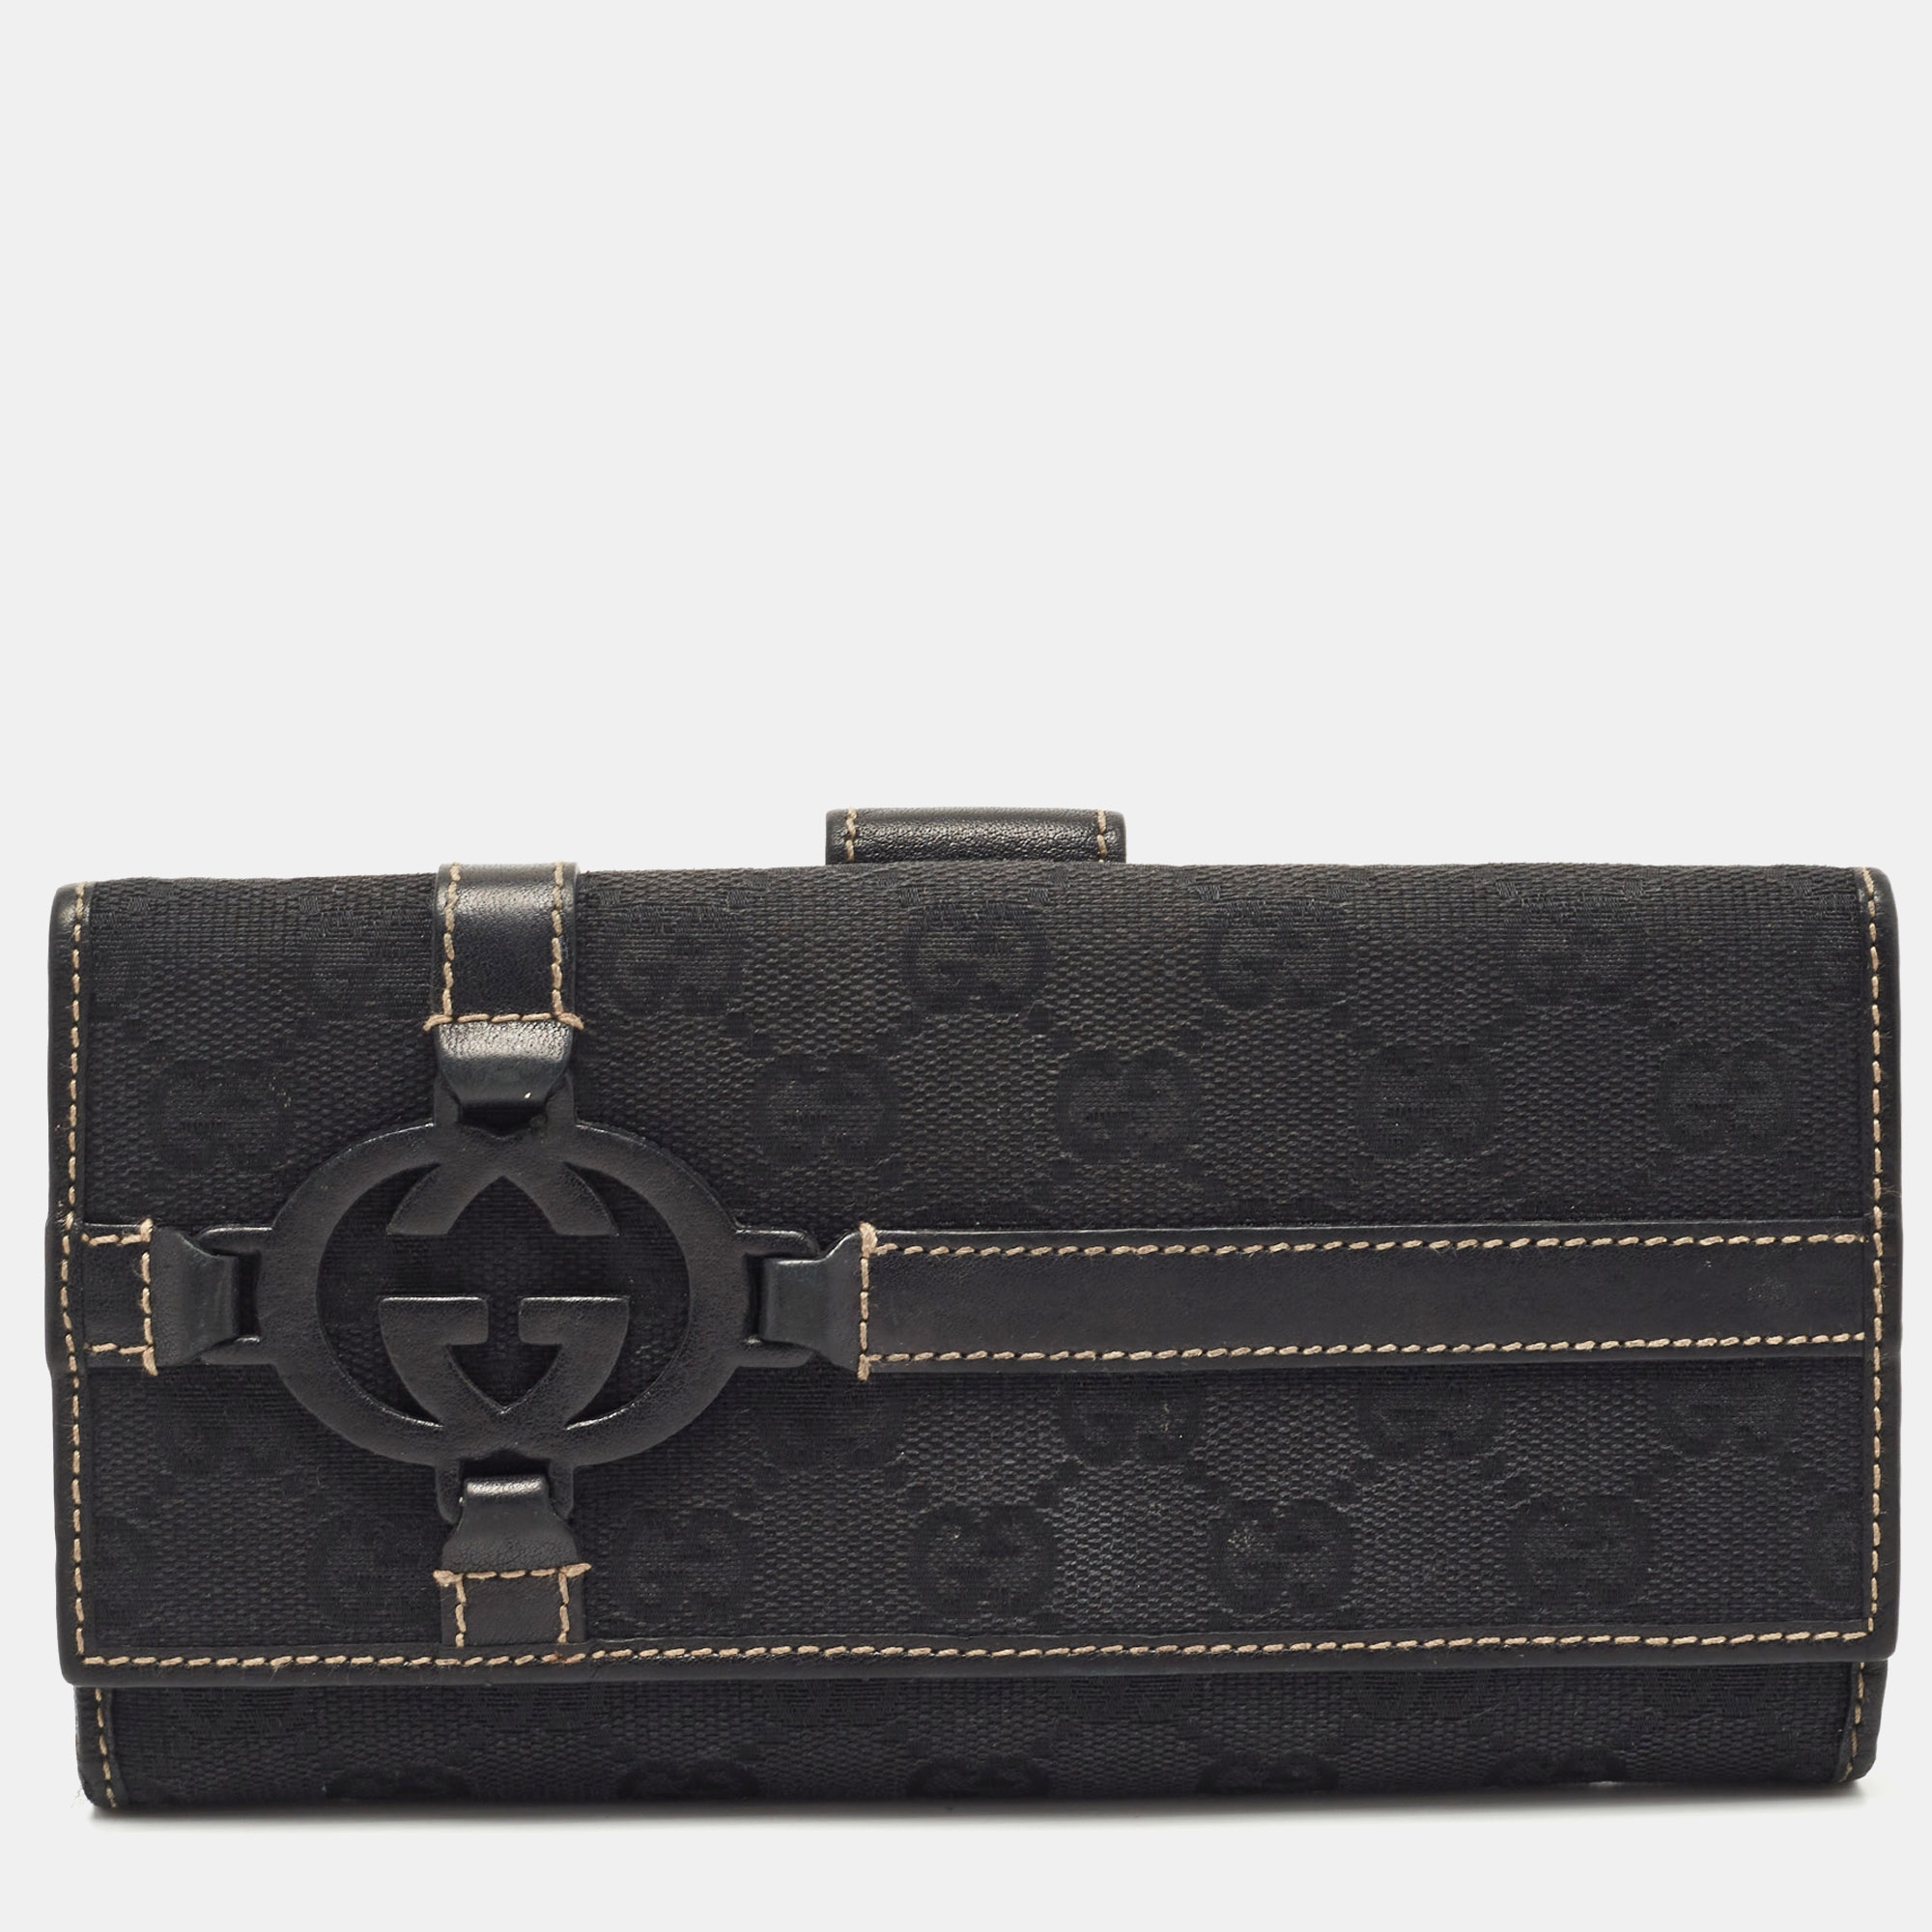 Gucci Black GG Canvas Interlocking G Continental Wallet